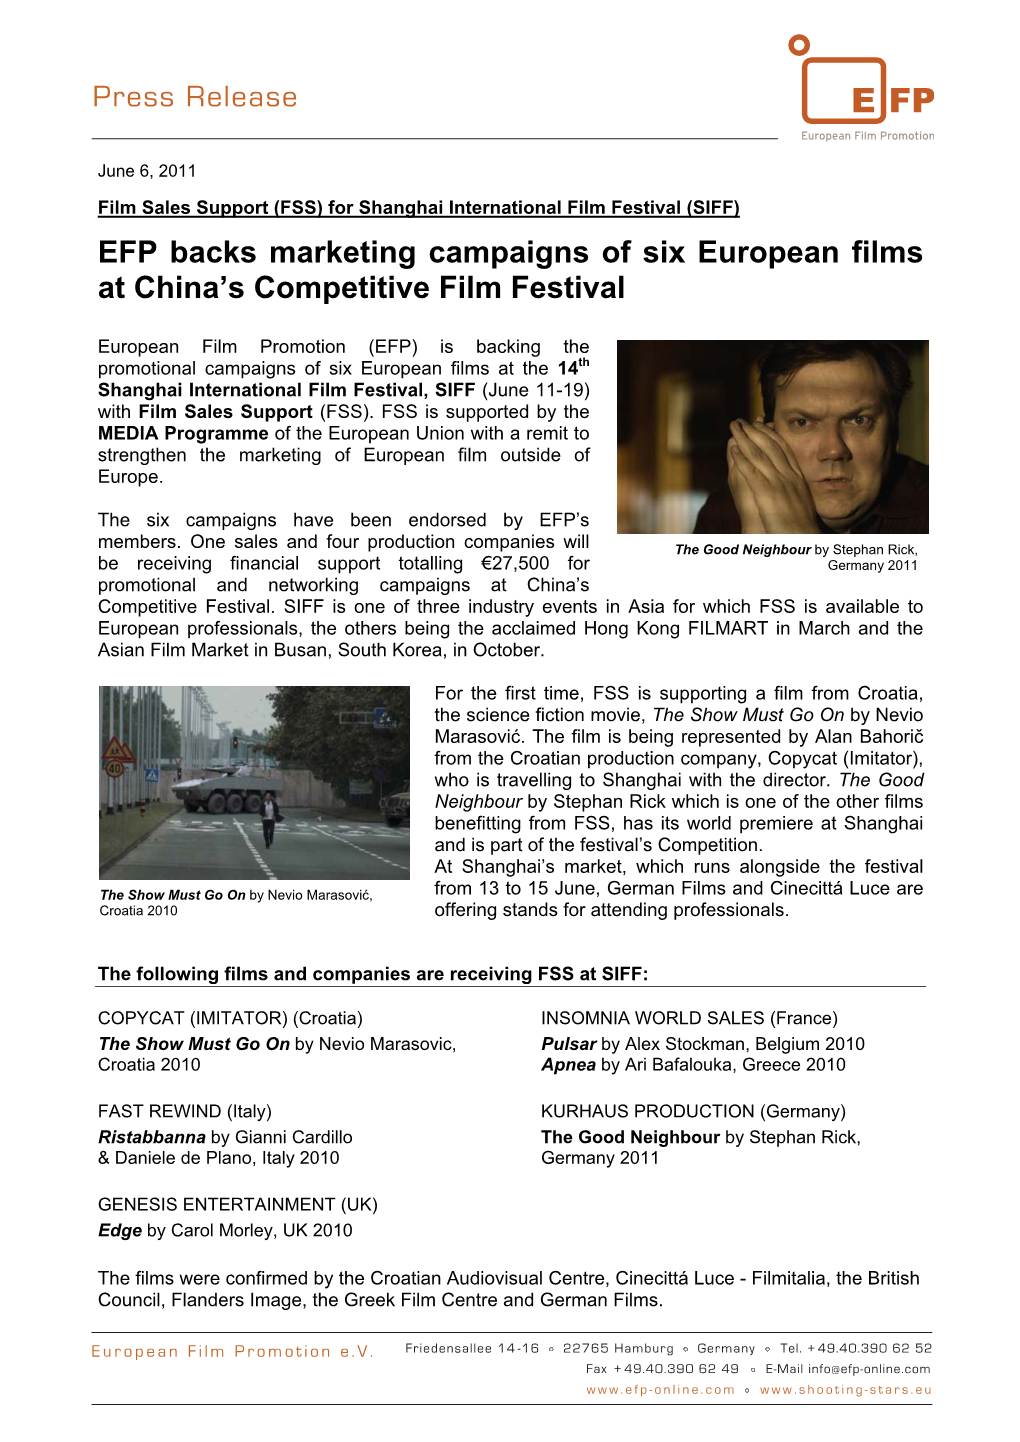 EFP Backs Marketing Campaigns of Six European Films at China's